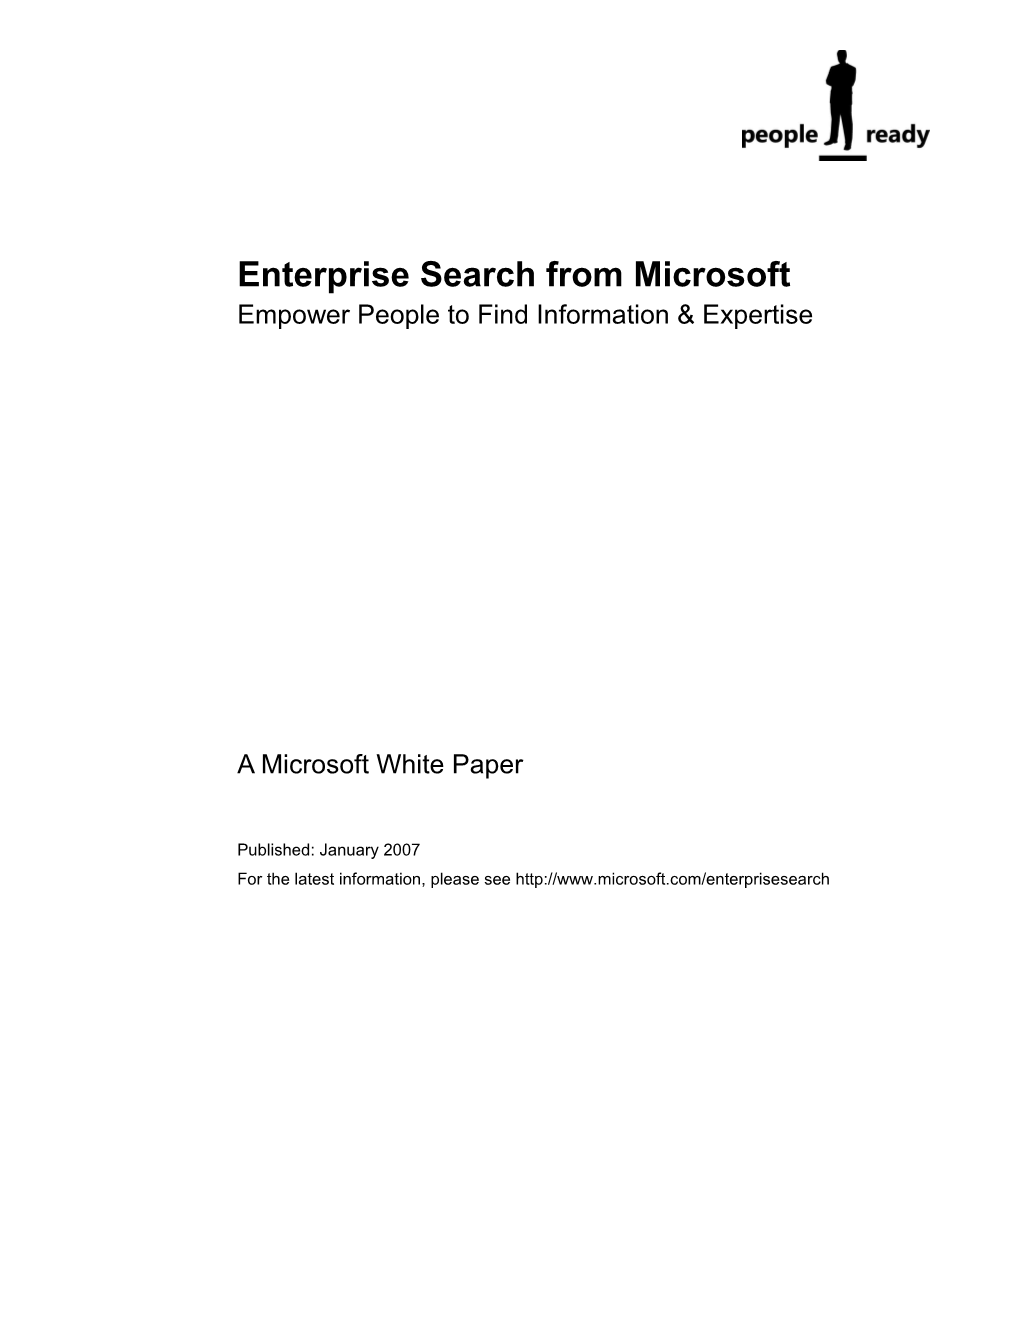 Enterprise Search from Microsoft White Paper